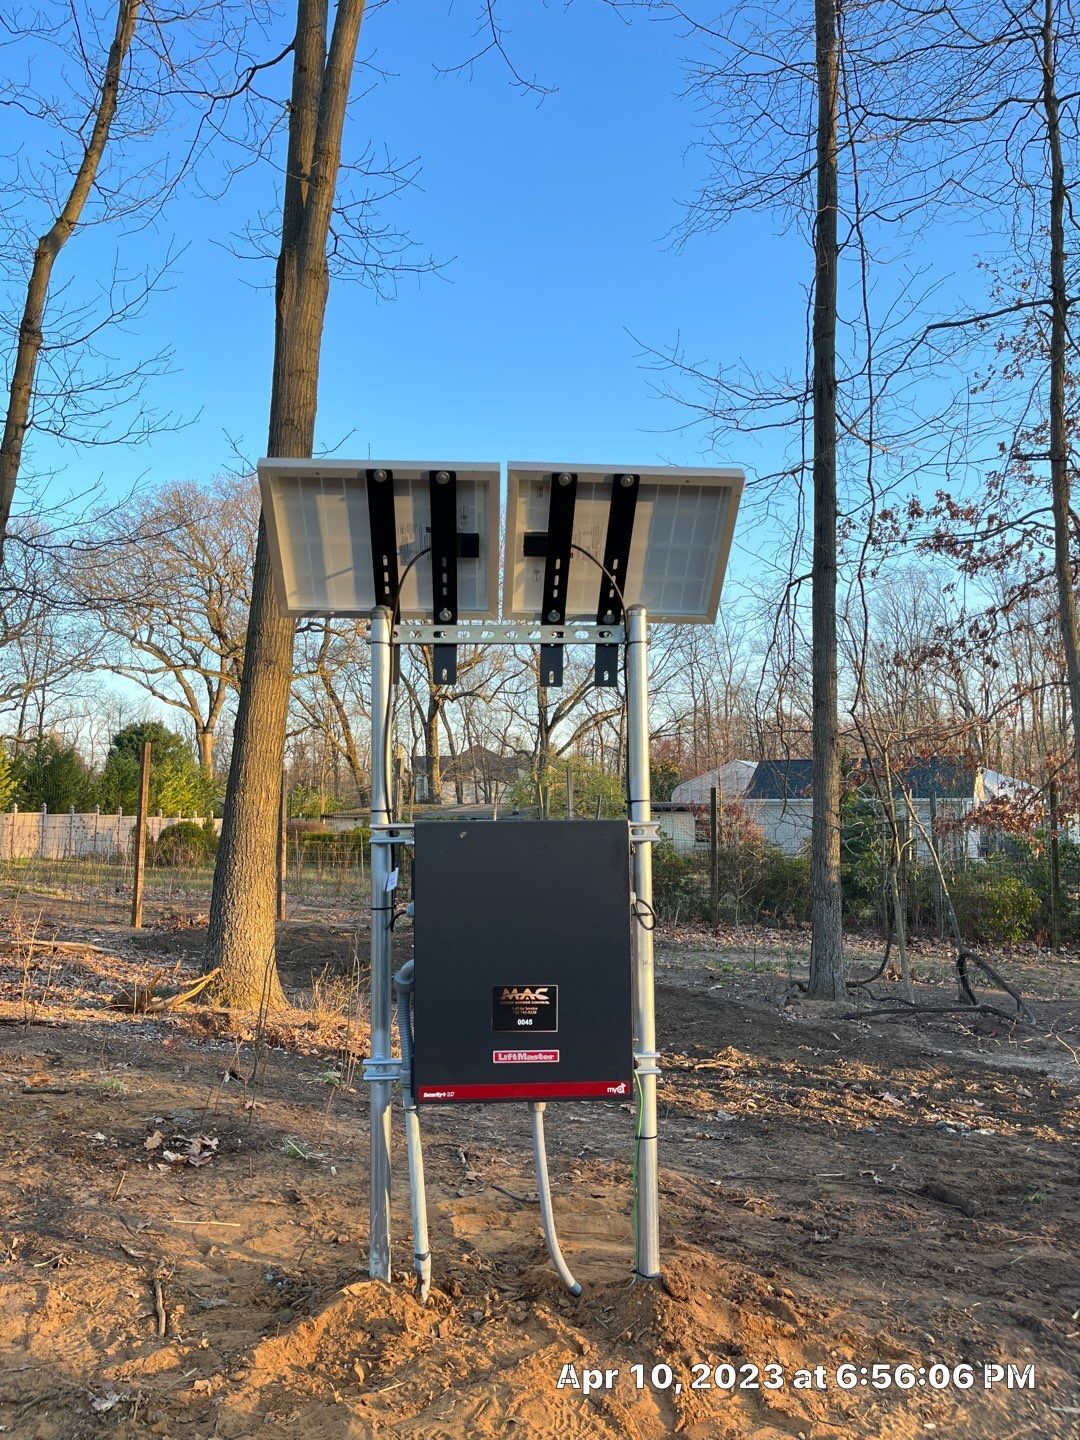 solar gate operator project